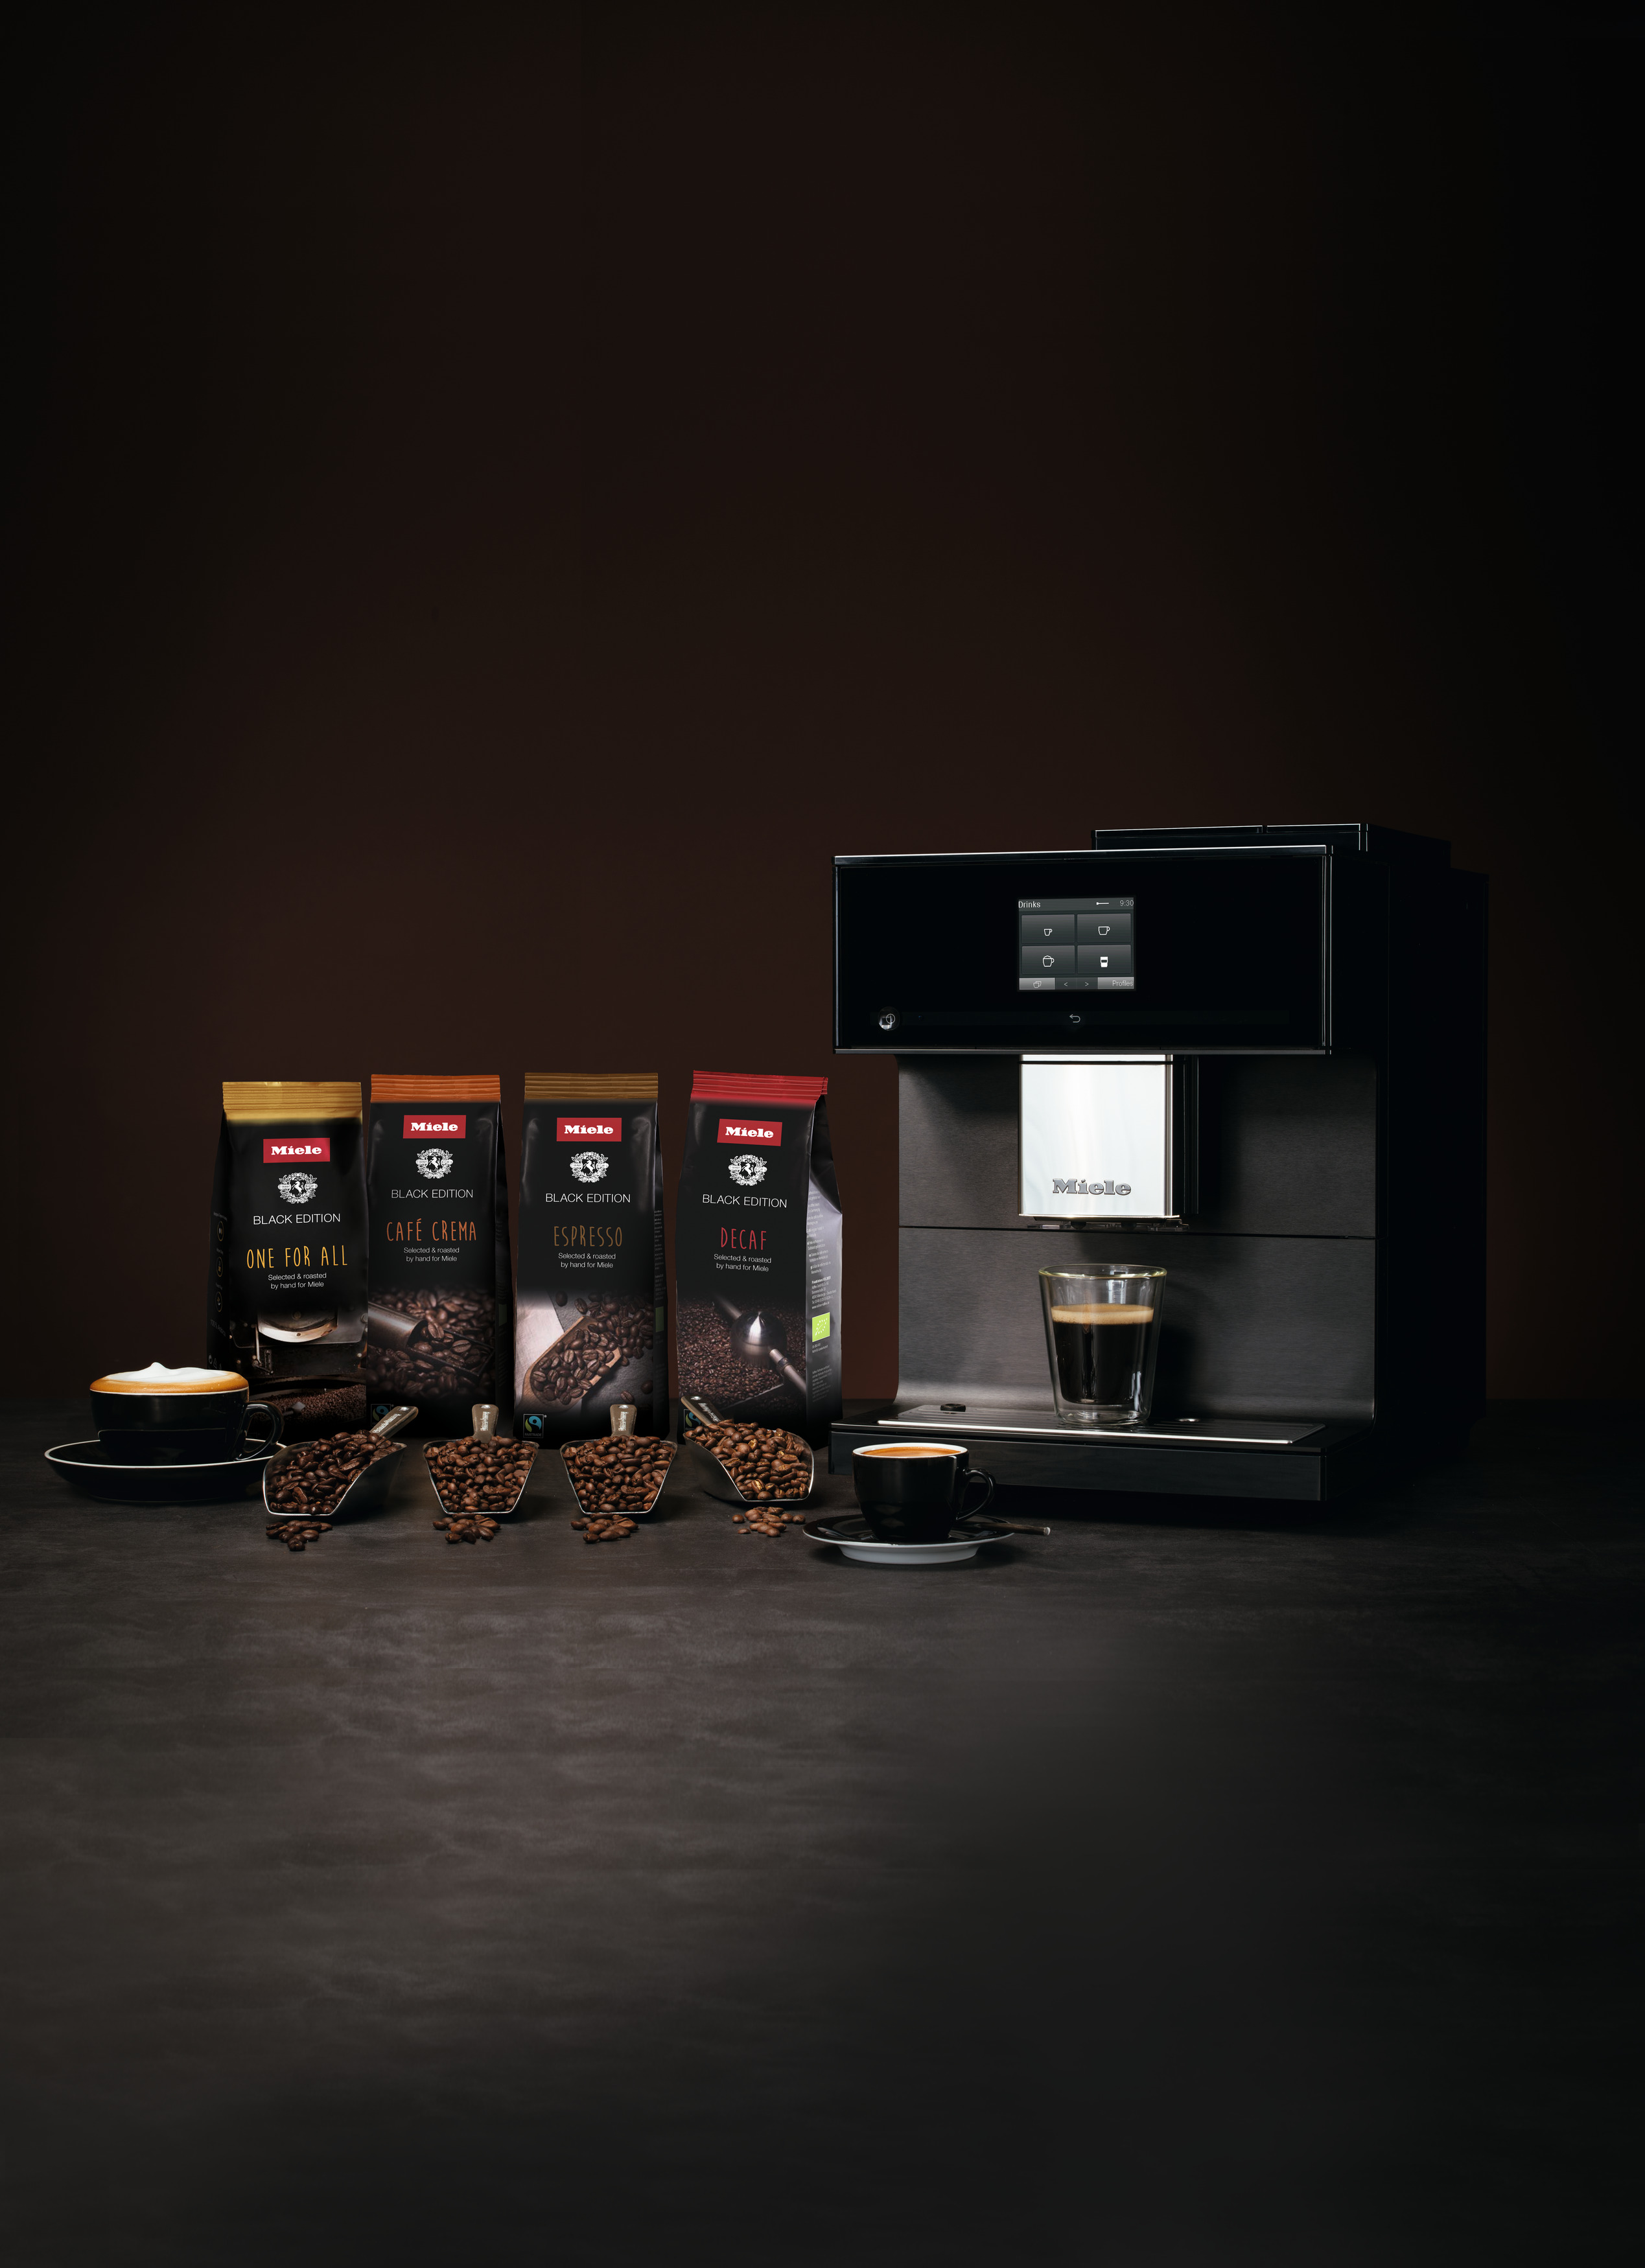 MIELE 7750 Obsidianschwarz Kaffeevollautomat CM